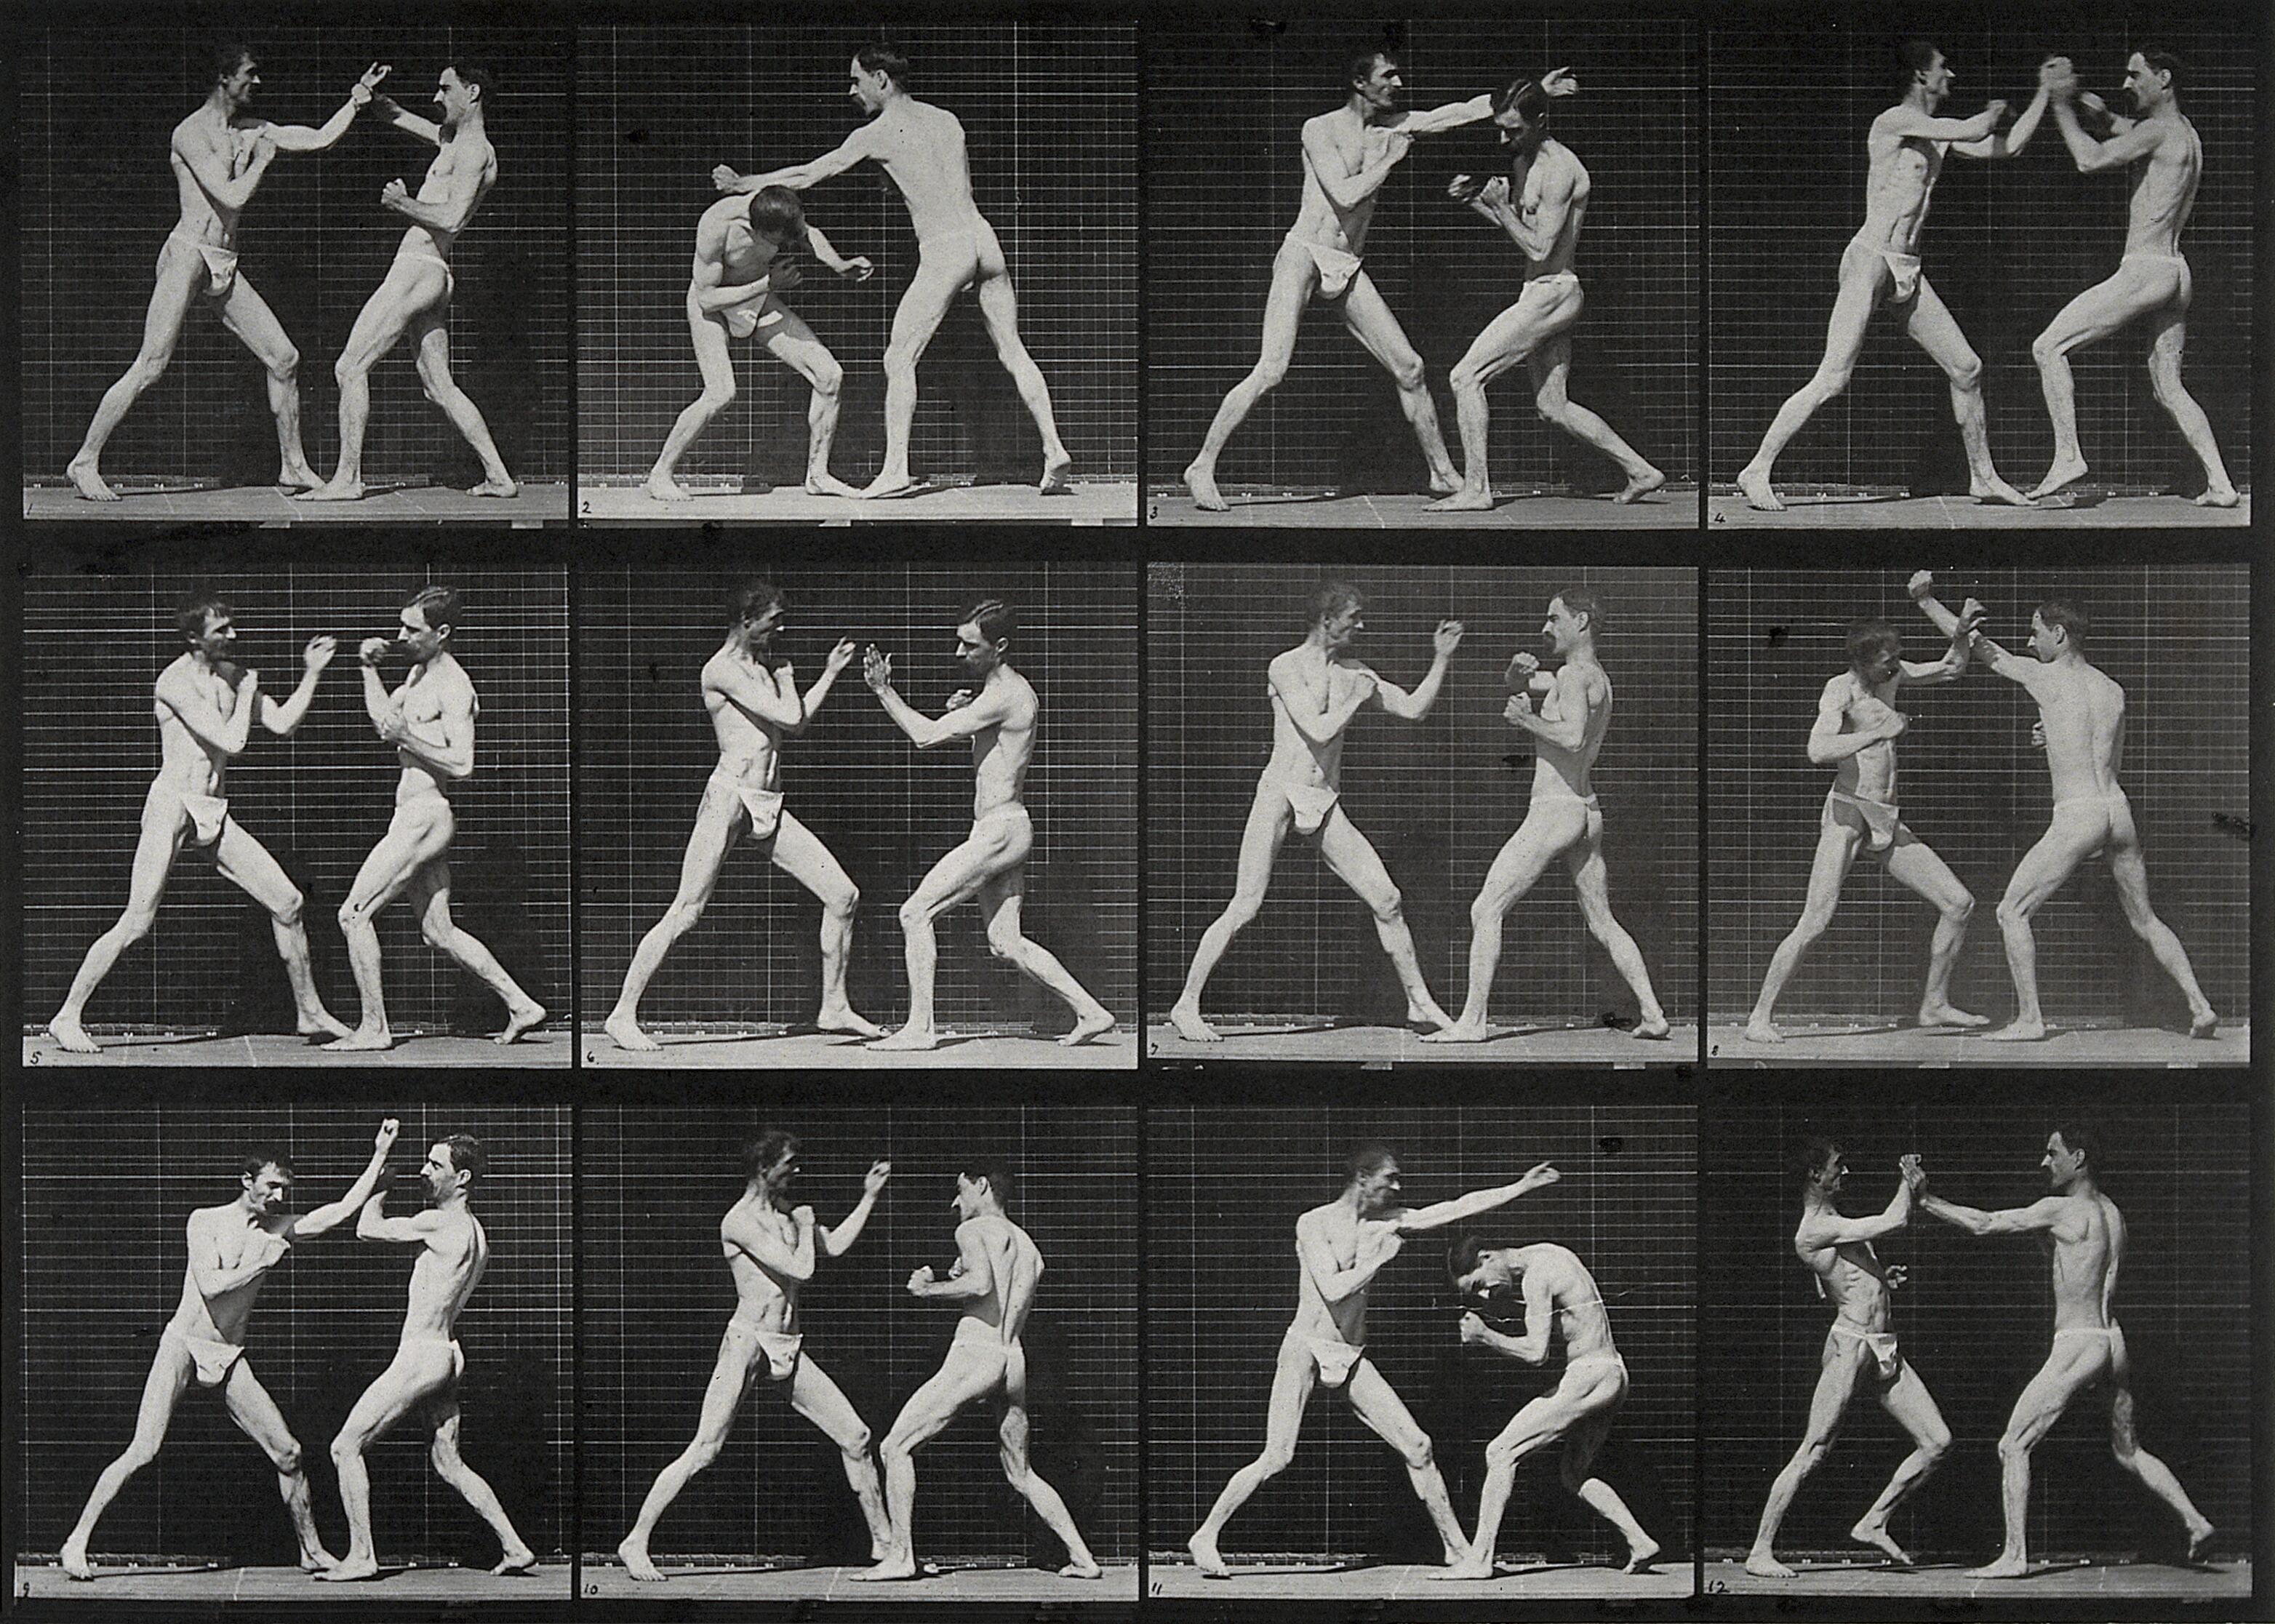 Zwei Männer Boxen by Eadweard Muybridge - 1887 Europeana Foundation